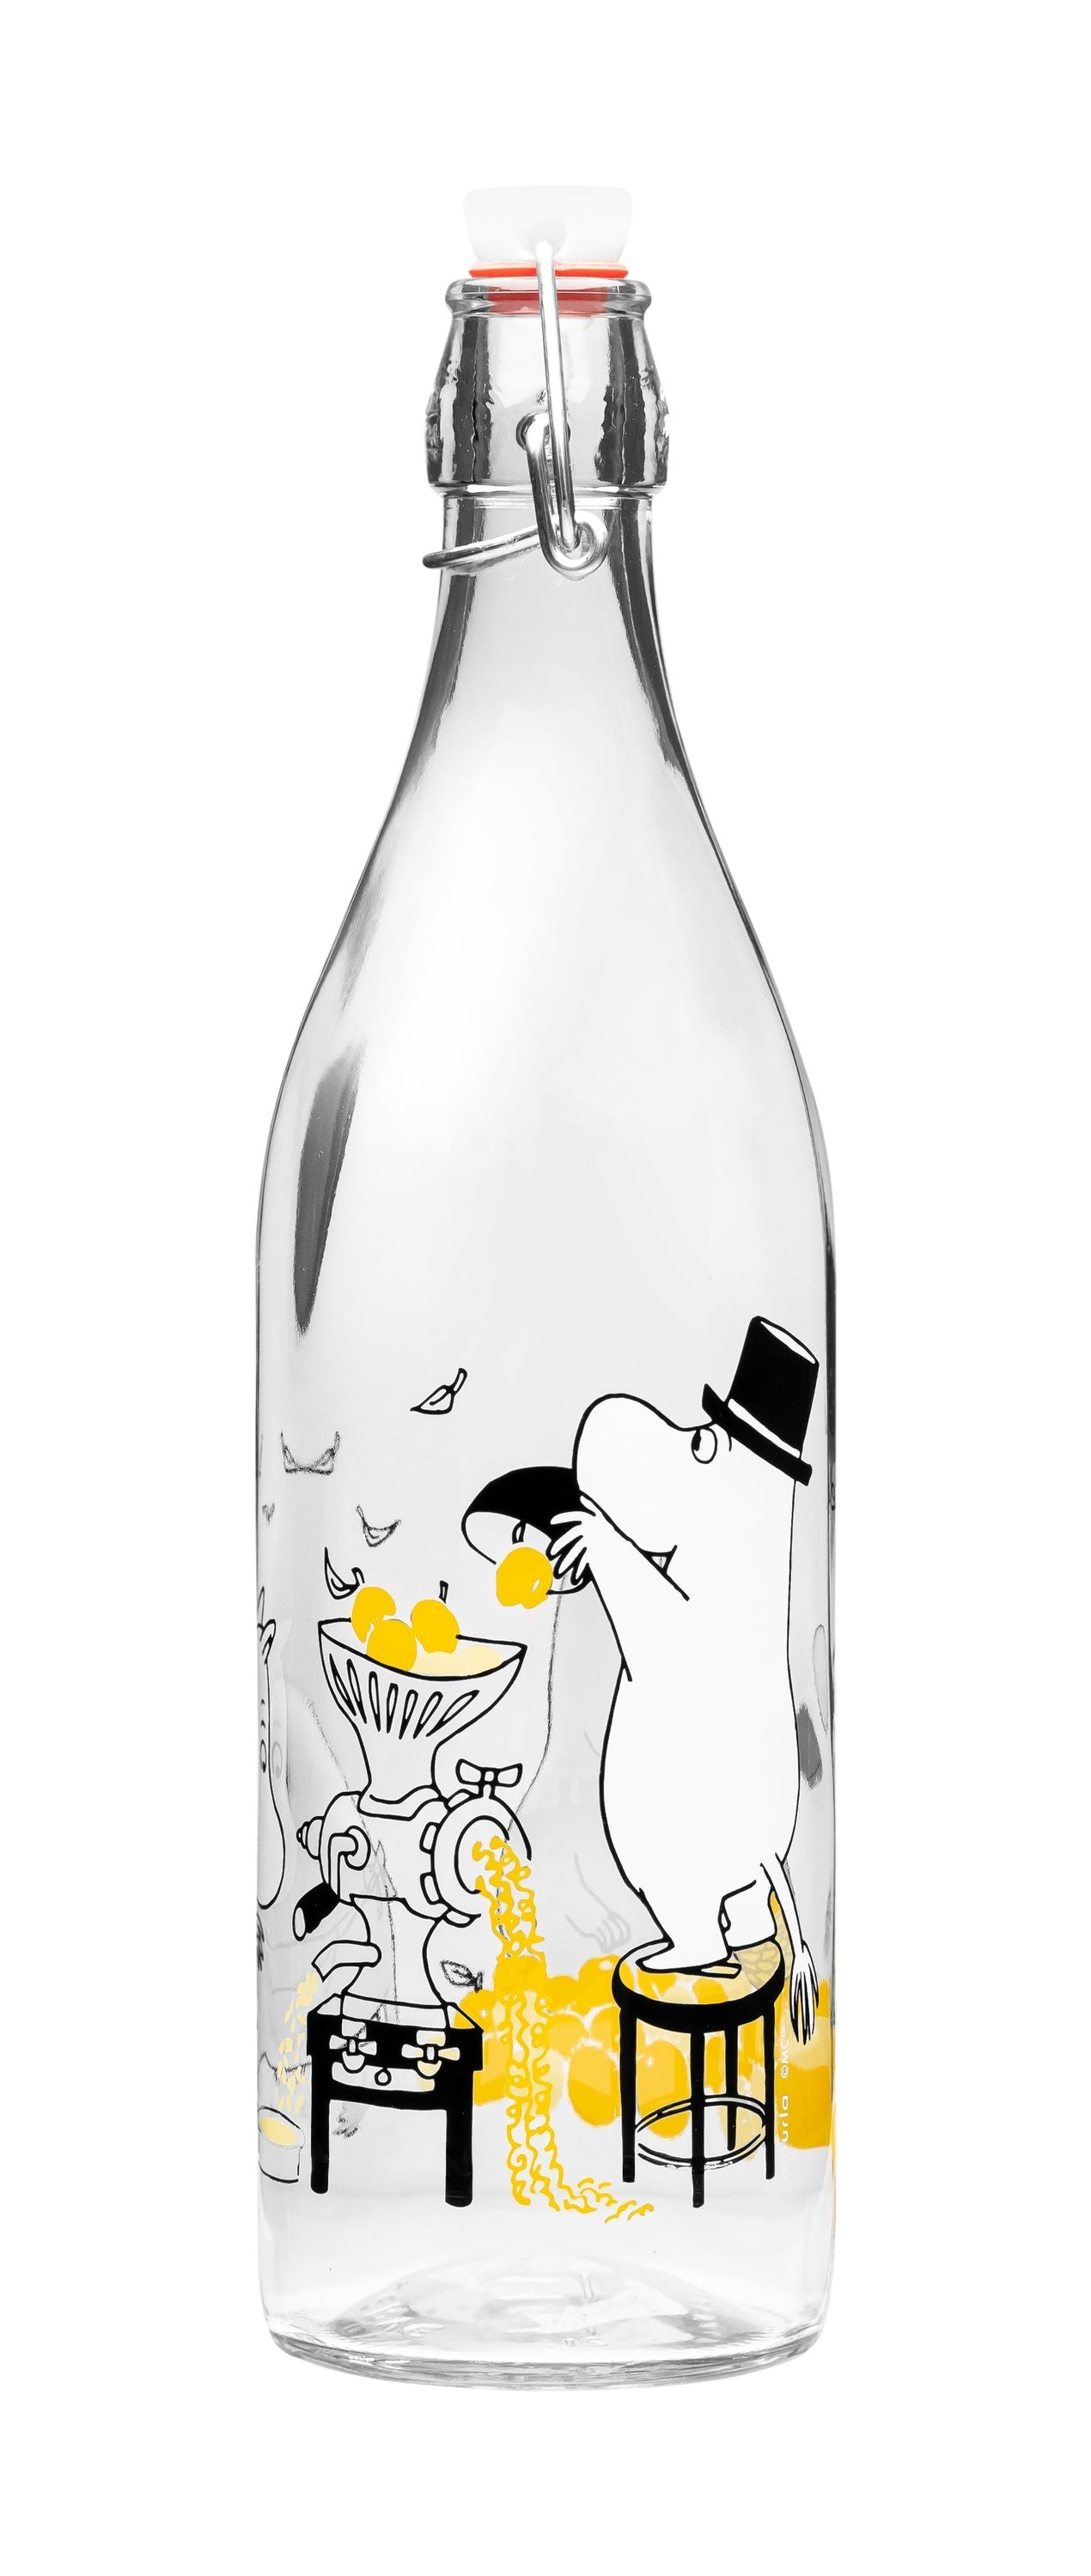 Skleněná láhev Muurla Moomin, ovoce